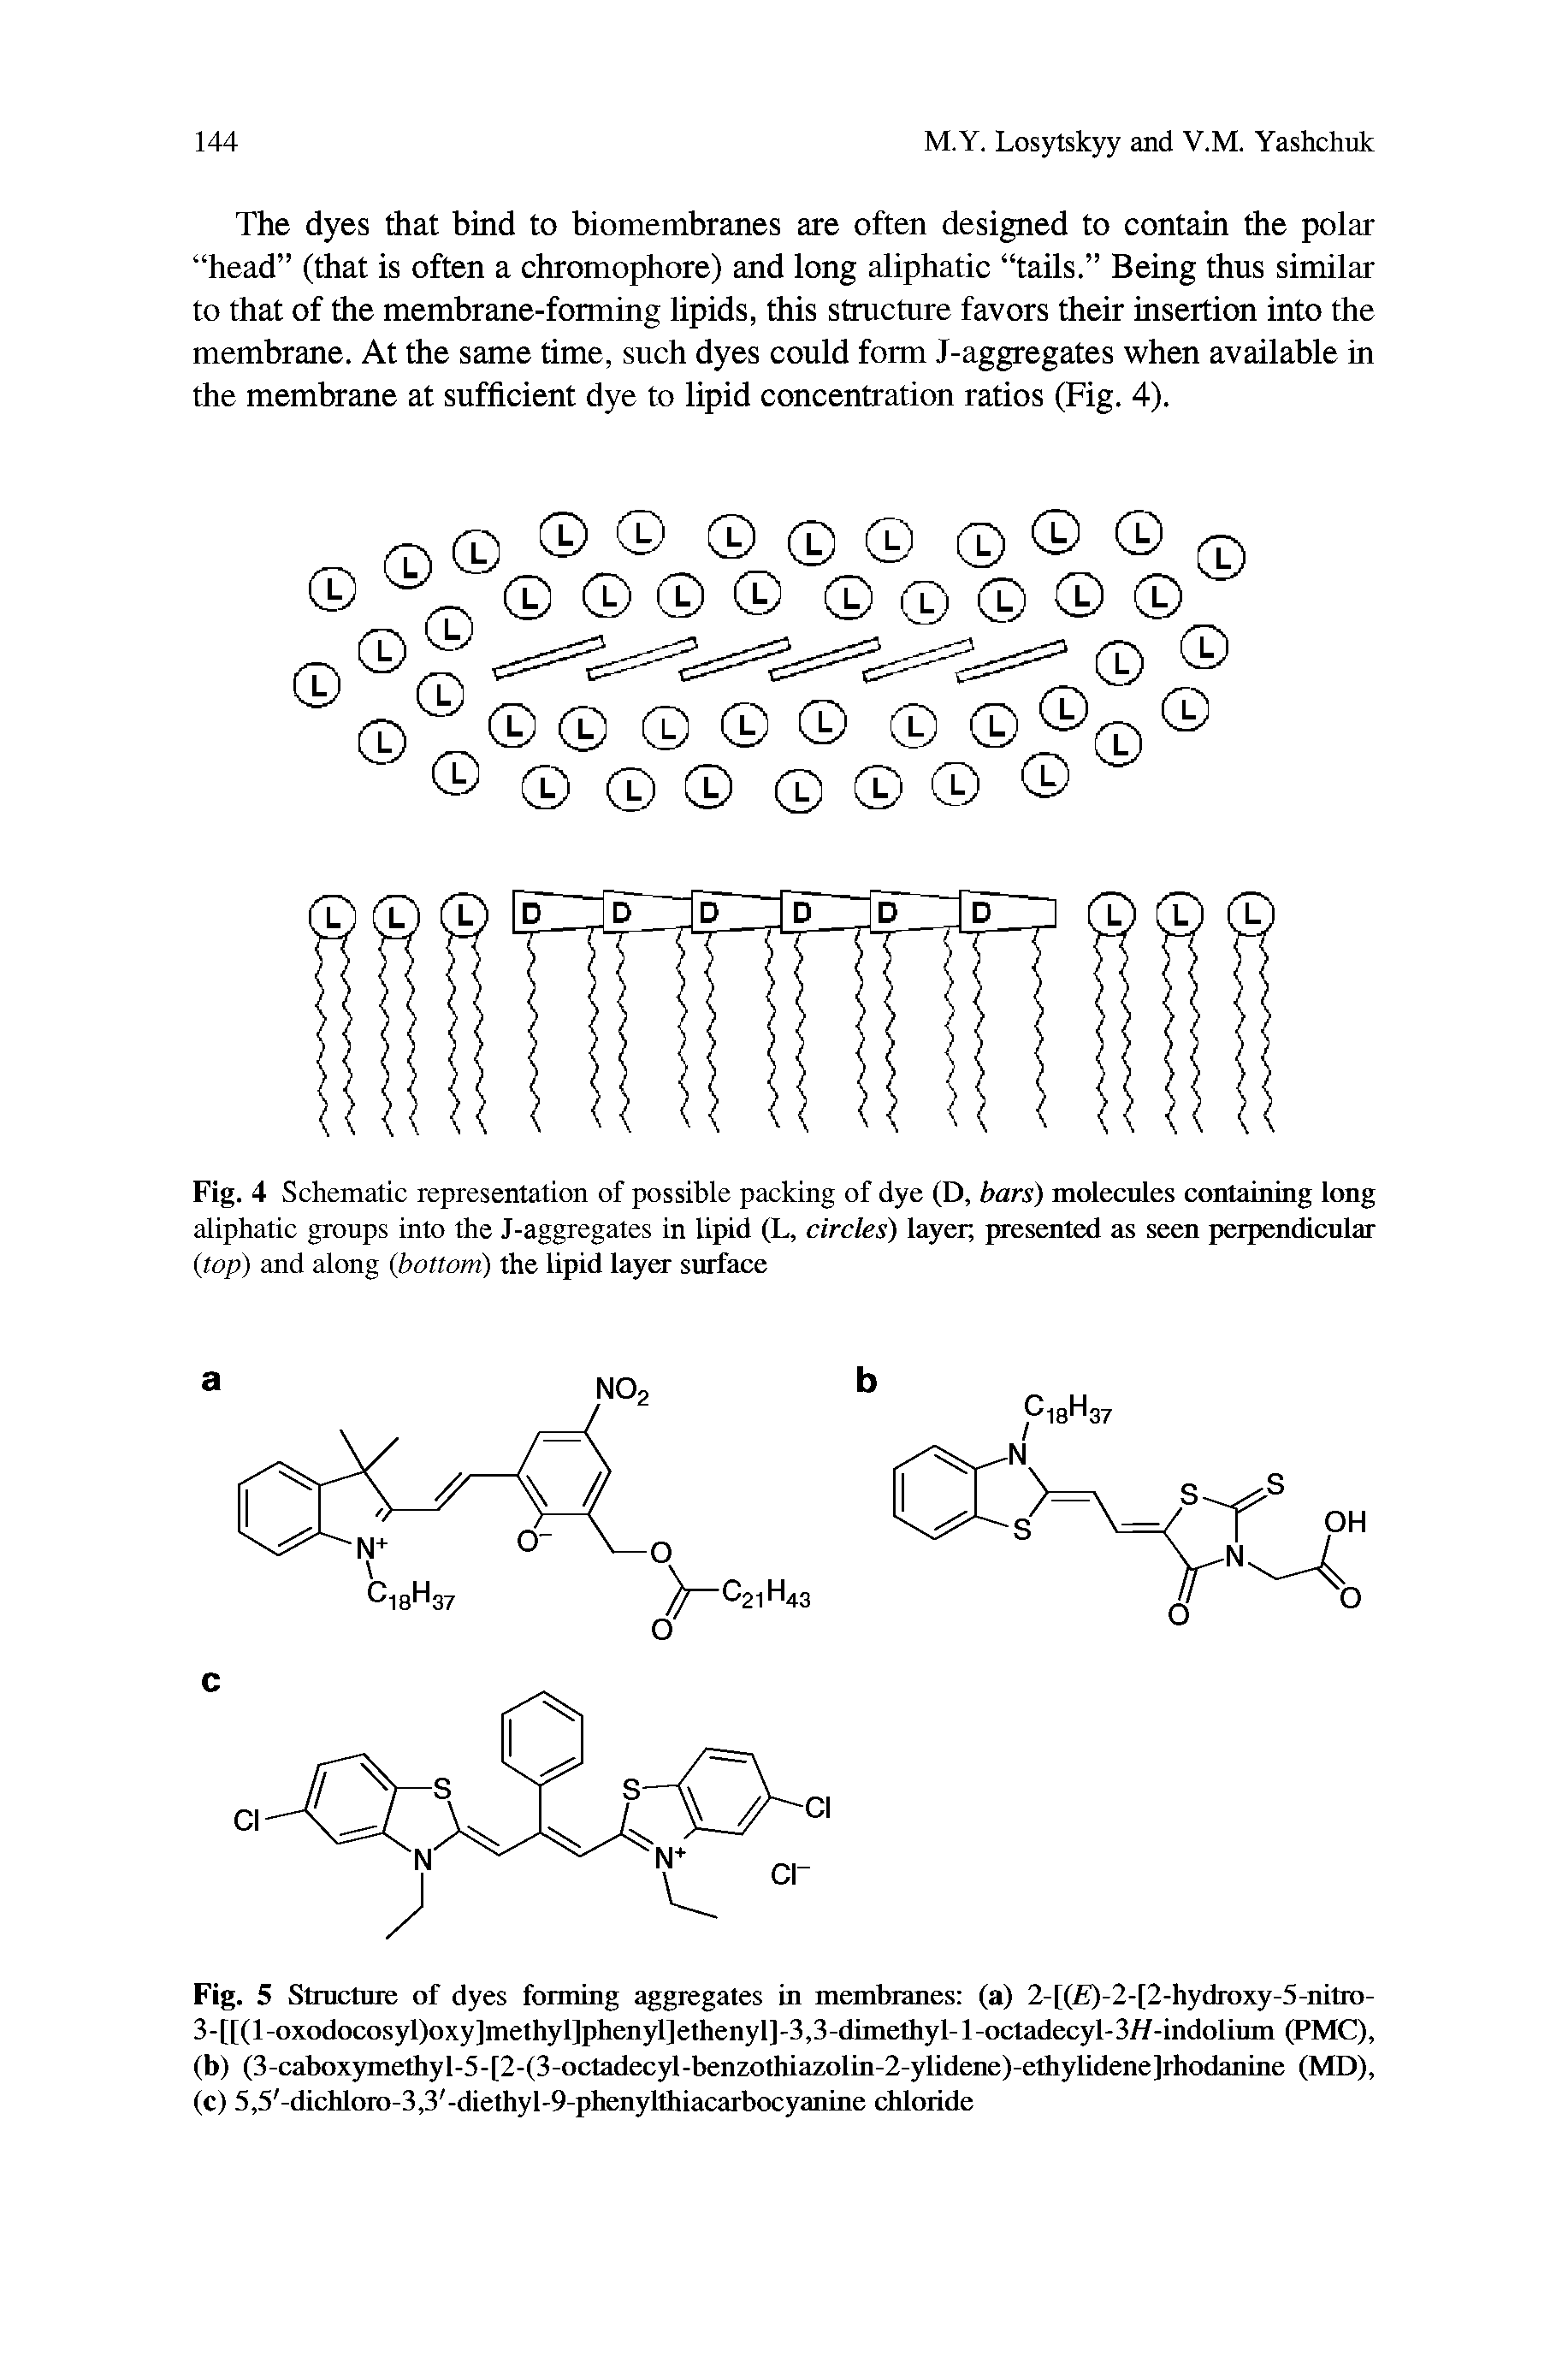 Fig. 5 Structure of dyes forming aggregates in membranes (a) 2-[( )-2-[2-hydroxy-5-nitro-3-ll(Toxodocosyl)oxy]methyl]phenyl]ethenyl]-3,3-dimethyl- l-octadecyl-3//-indolium (PMC),...